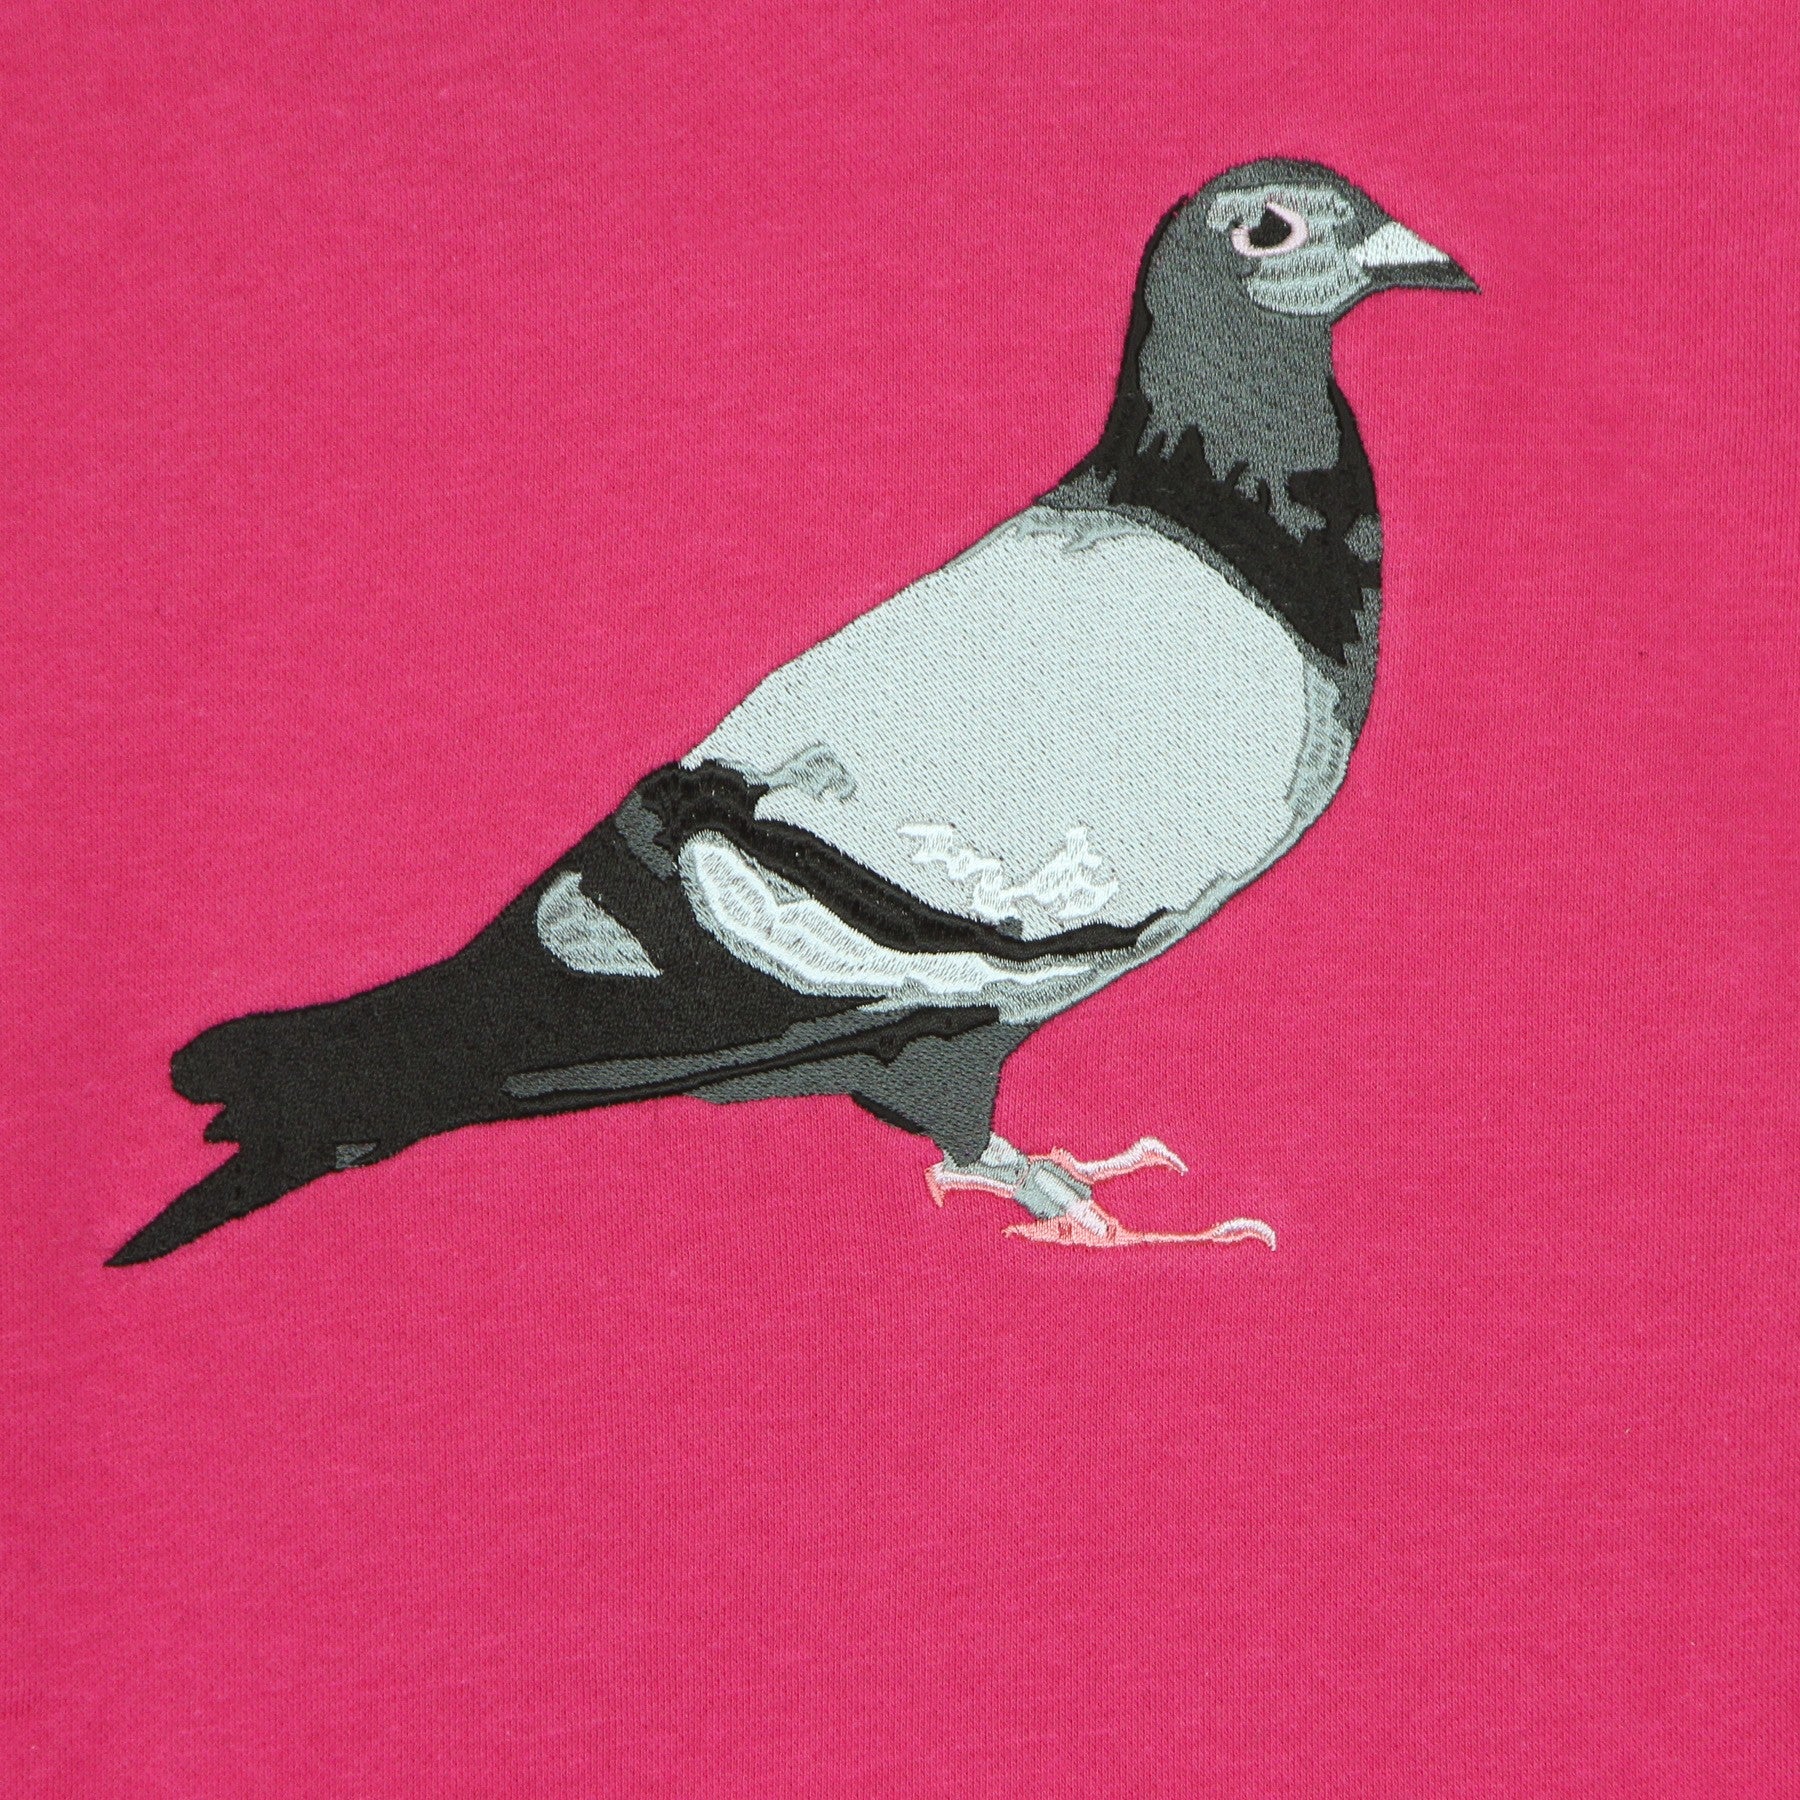 Felpa Cappuccio Uomo Pigeon Logo Hoodie Ruby Pink